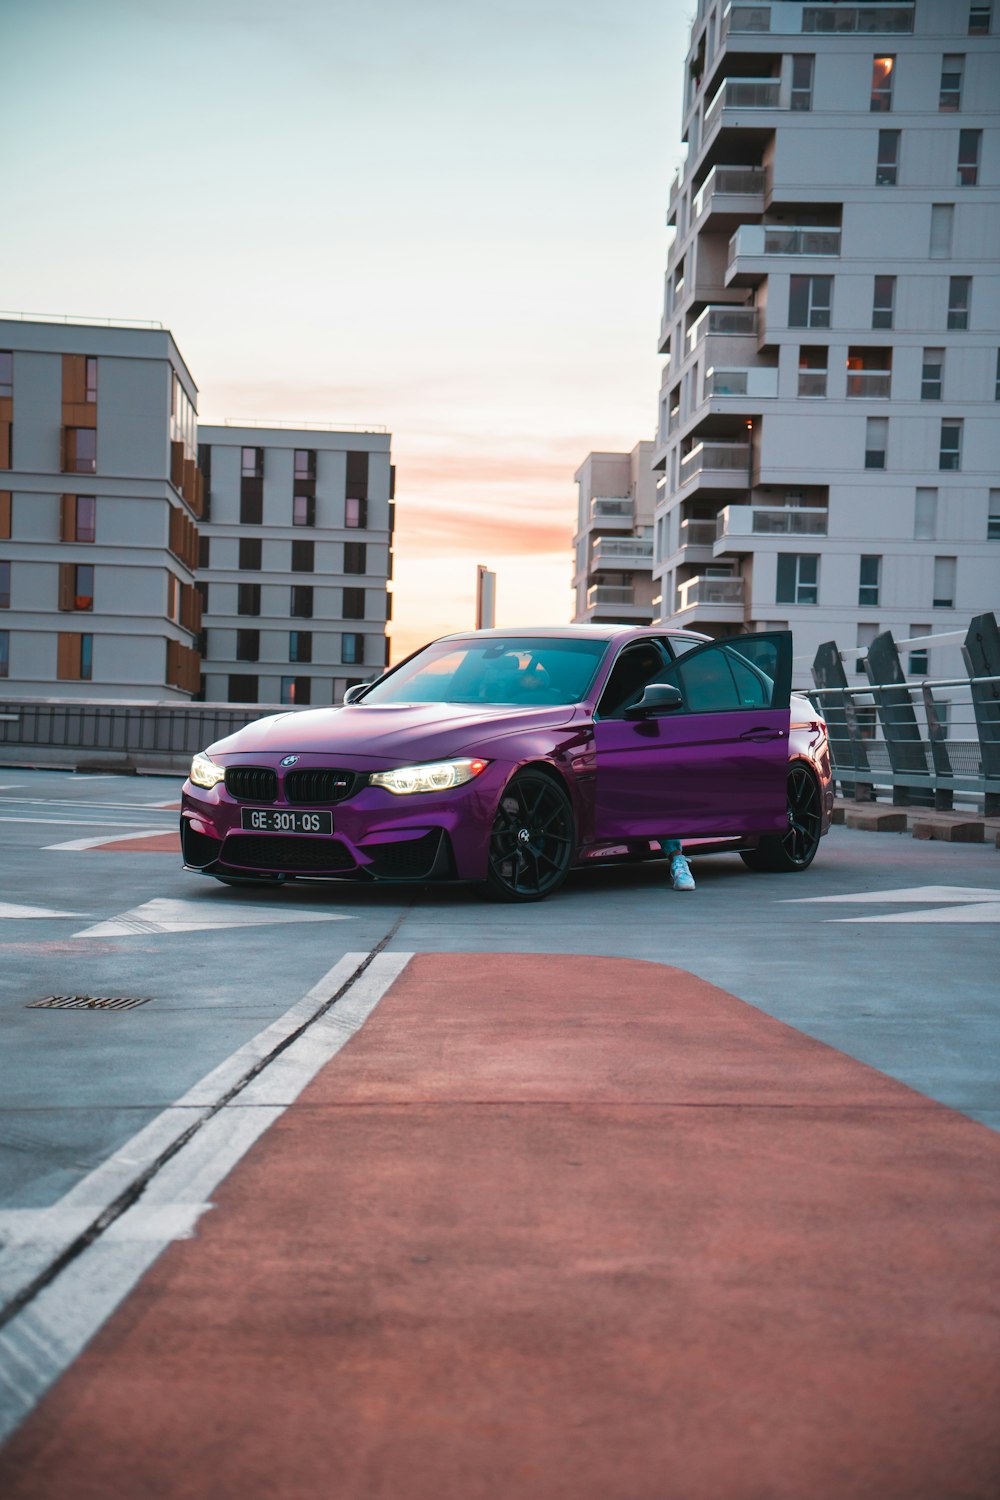 a purple car parked on a street